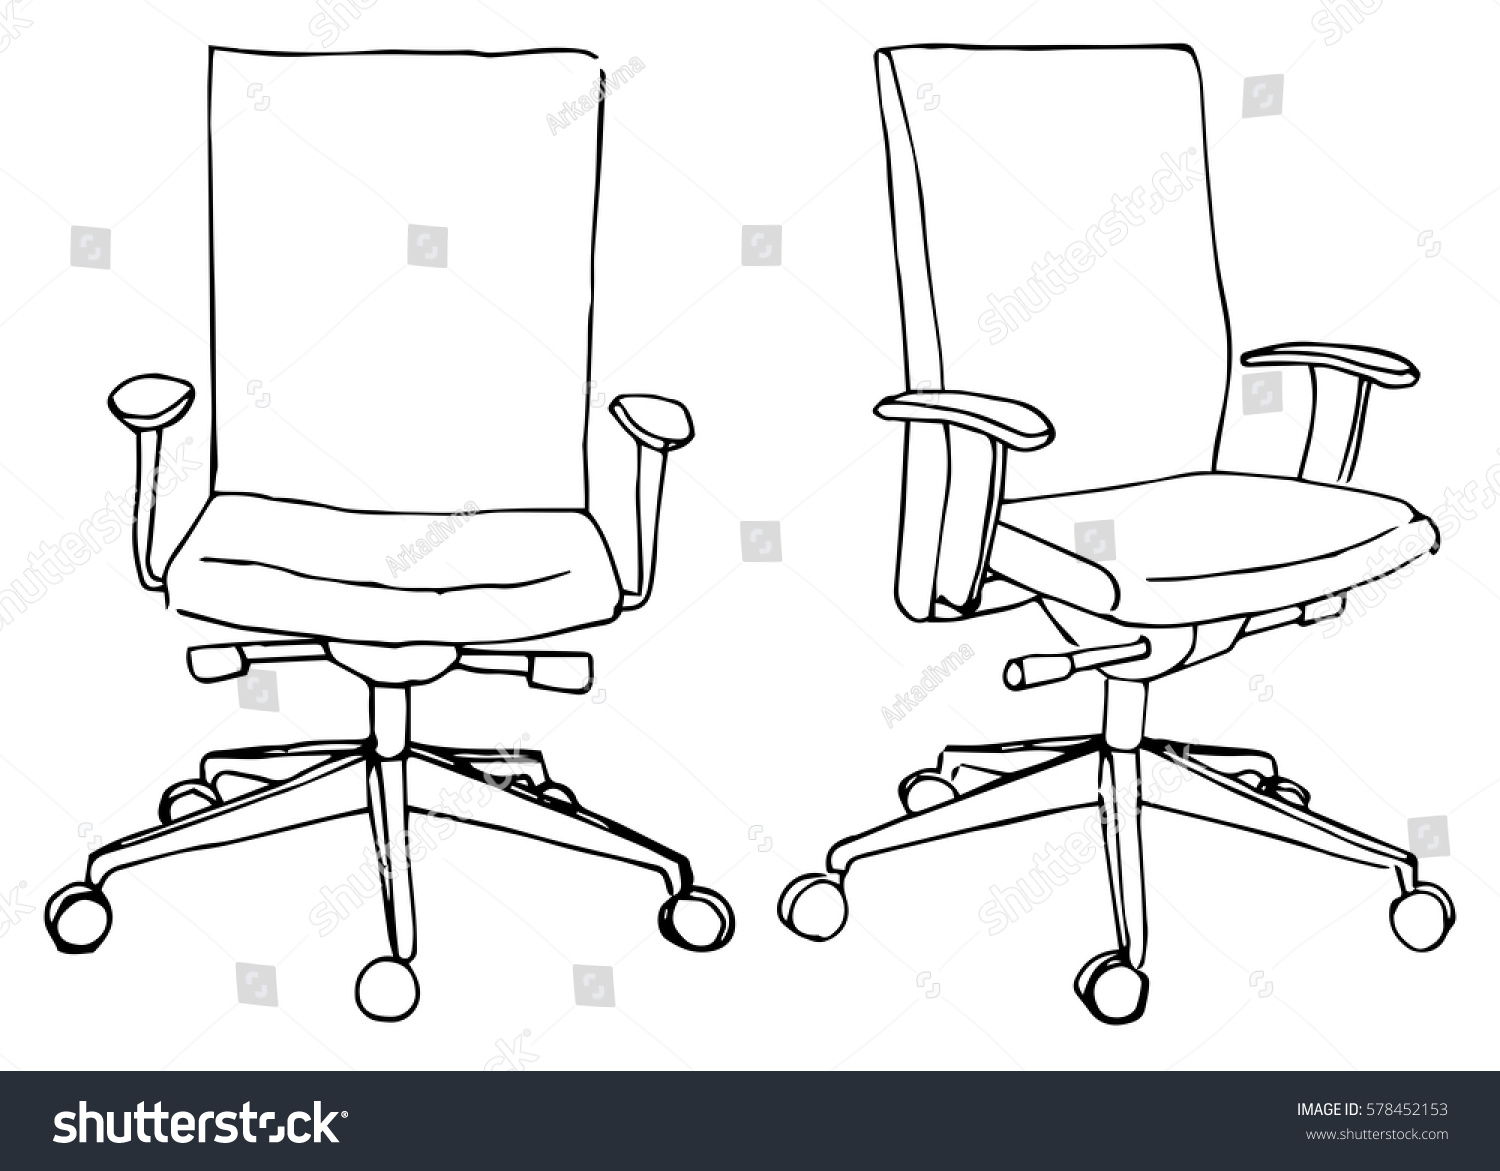 5,834 Office chair doodle Images, Stock Photos & Vectors | Shutterstock